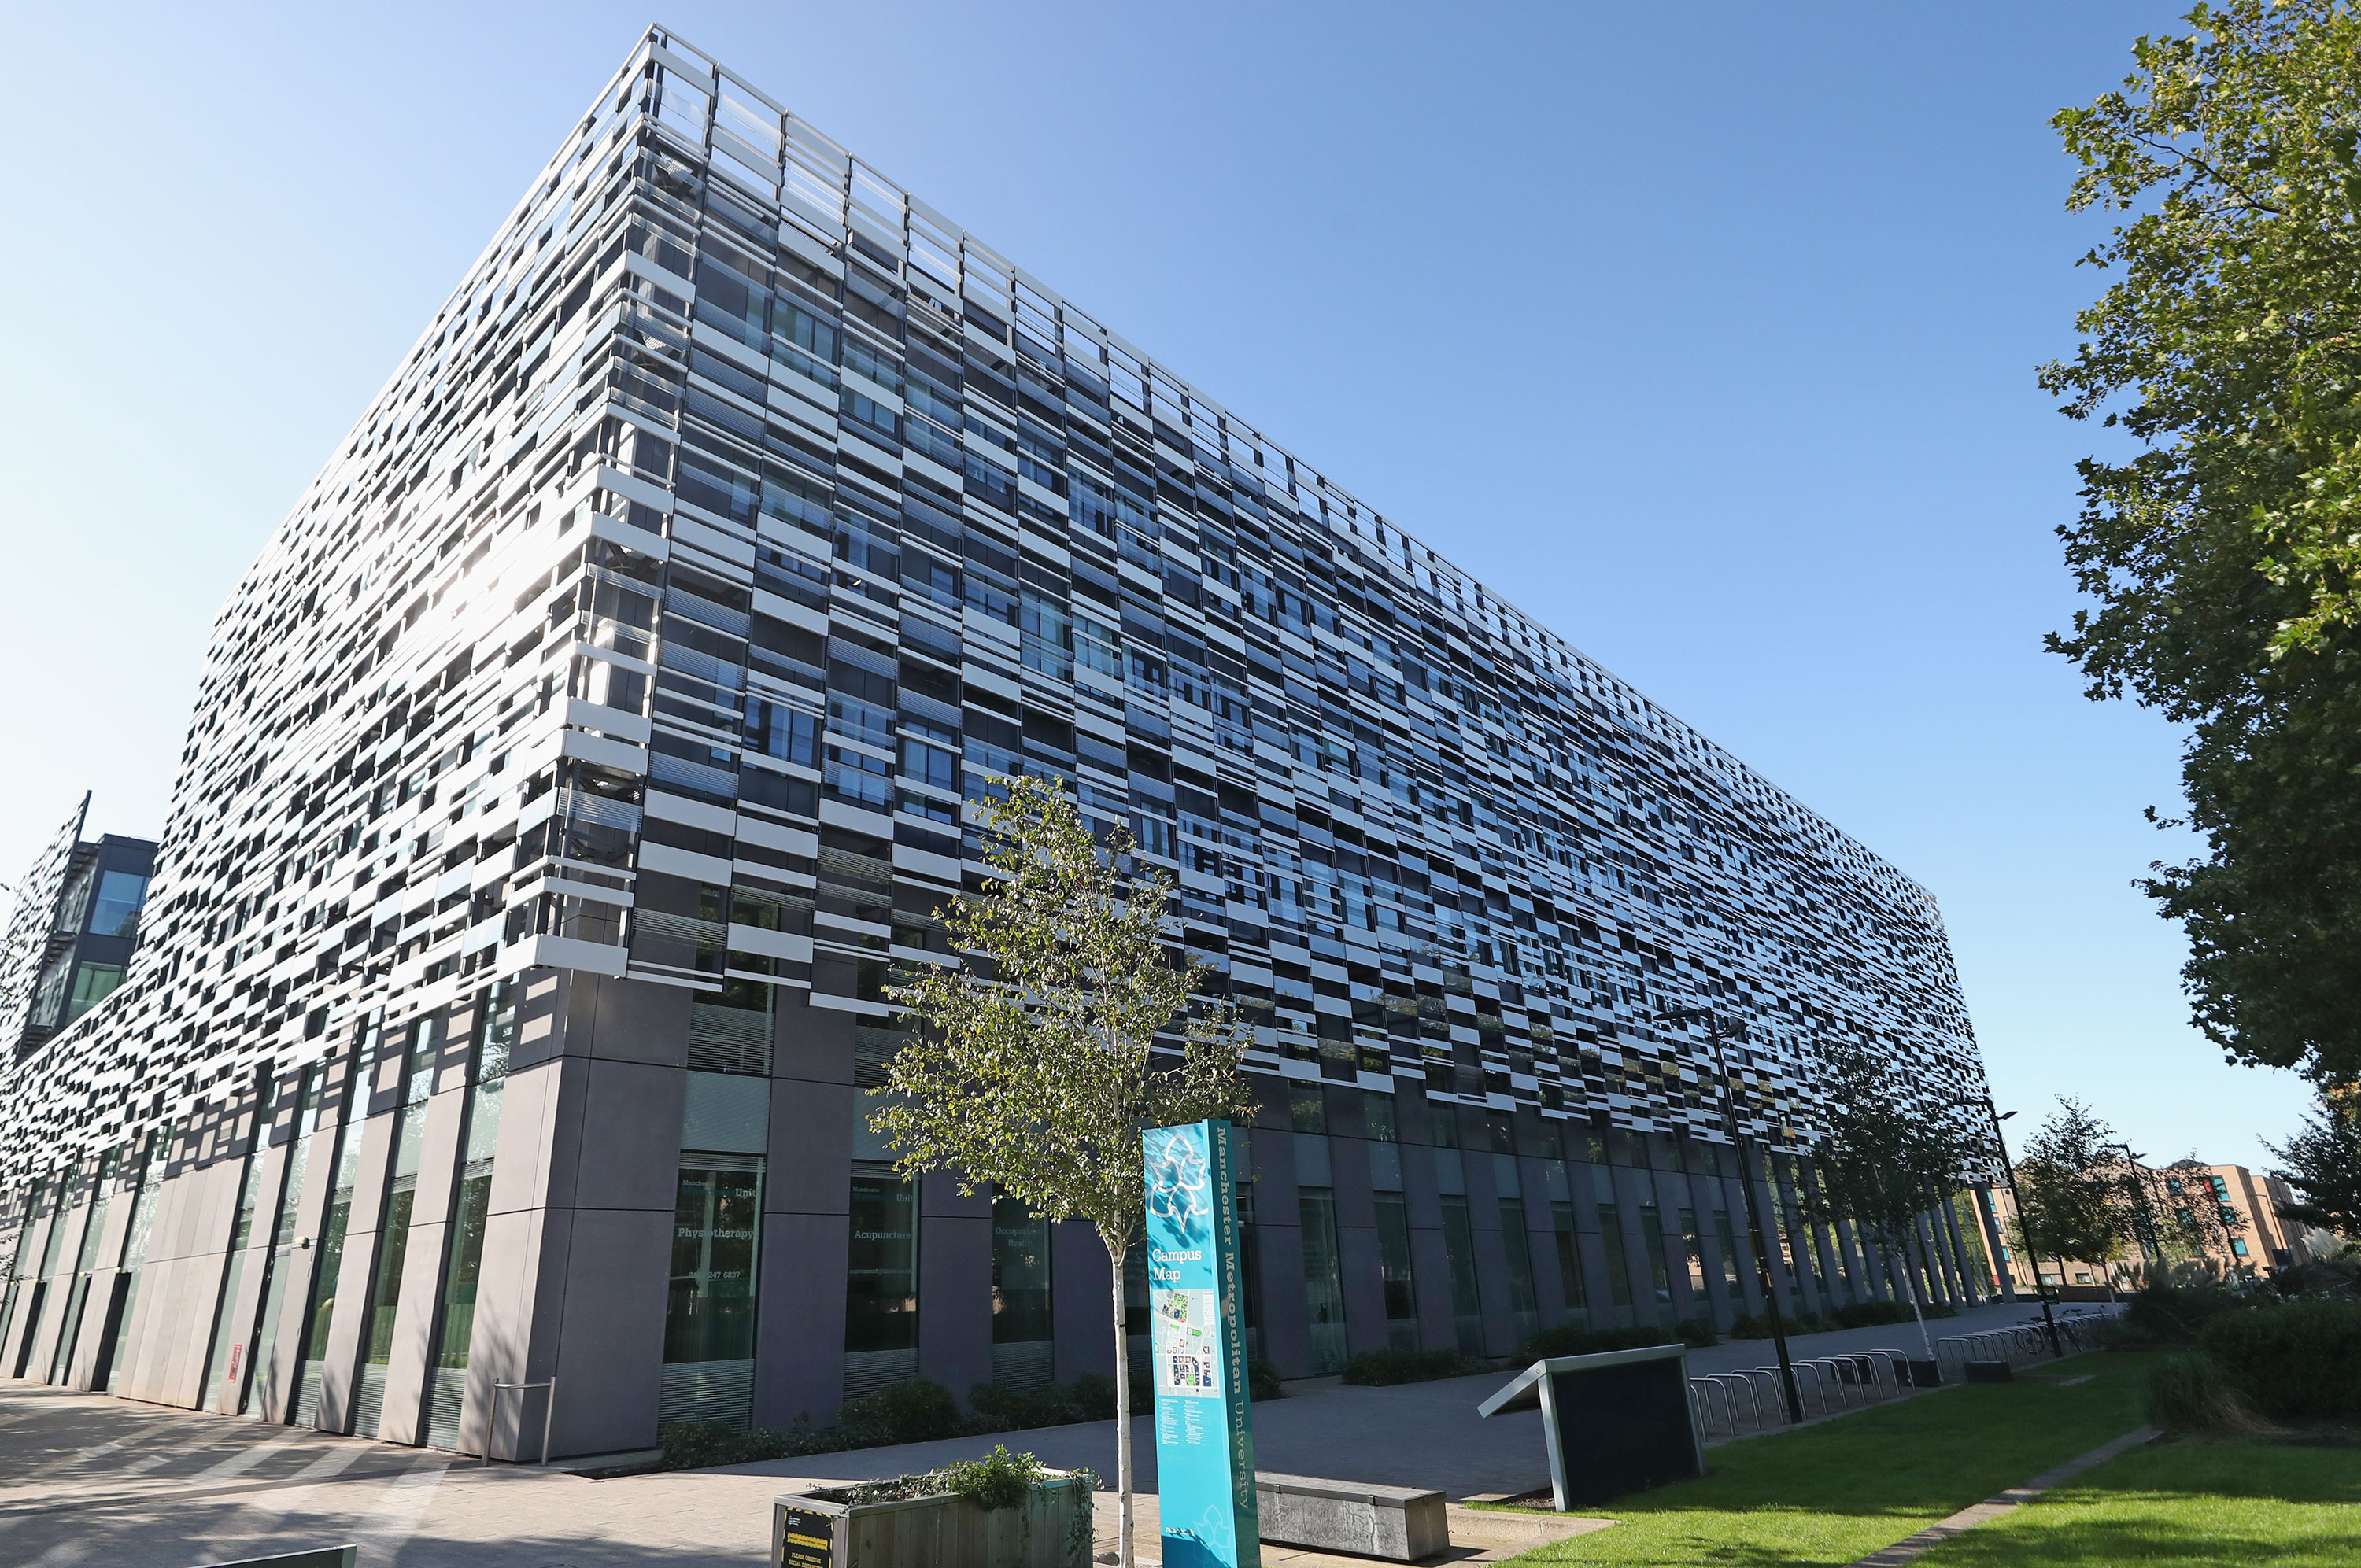 Manchester Metropolitan University's campus